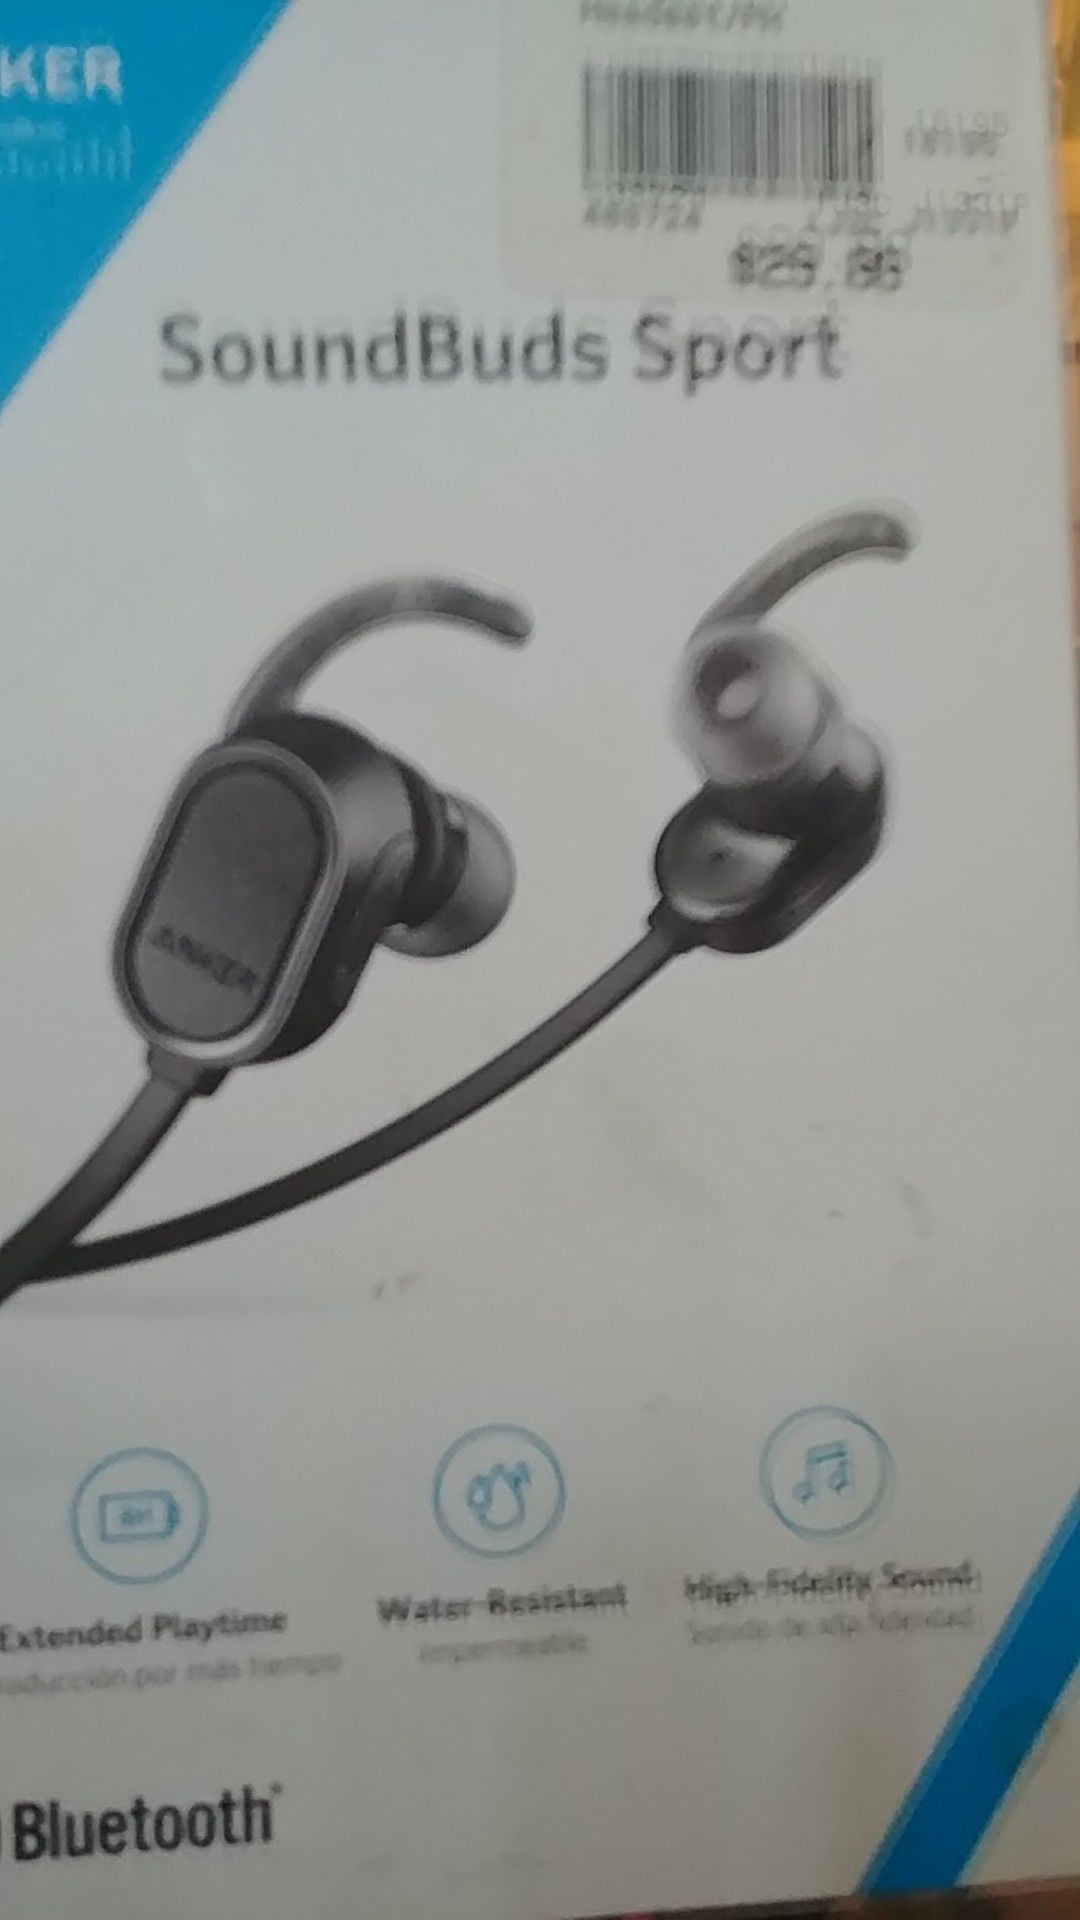 Anker Bluetooth headphones